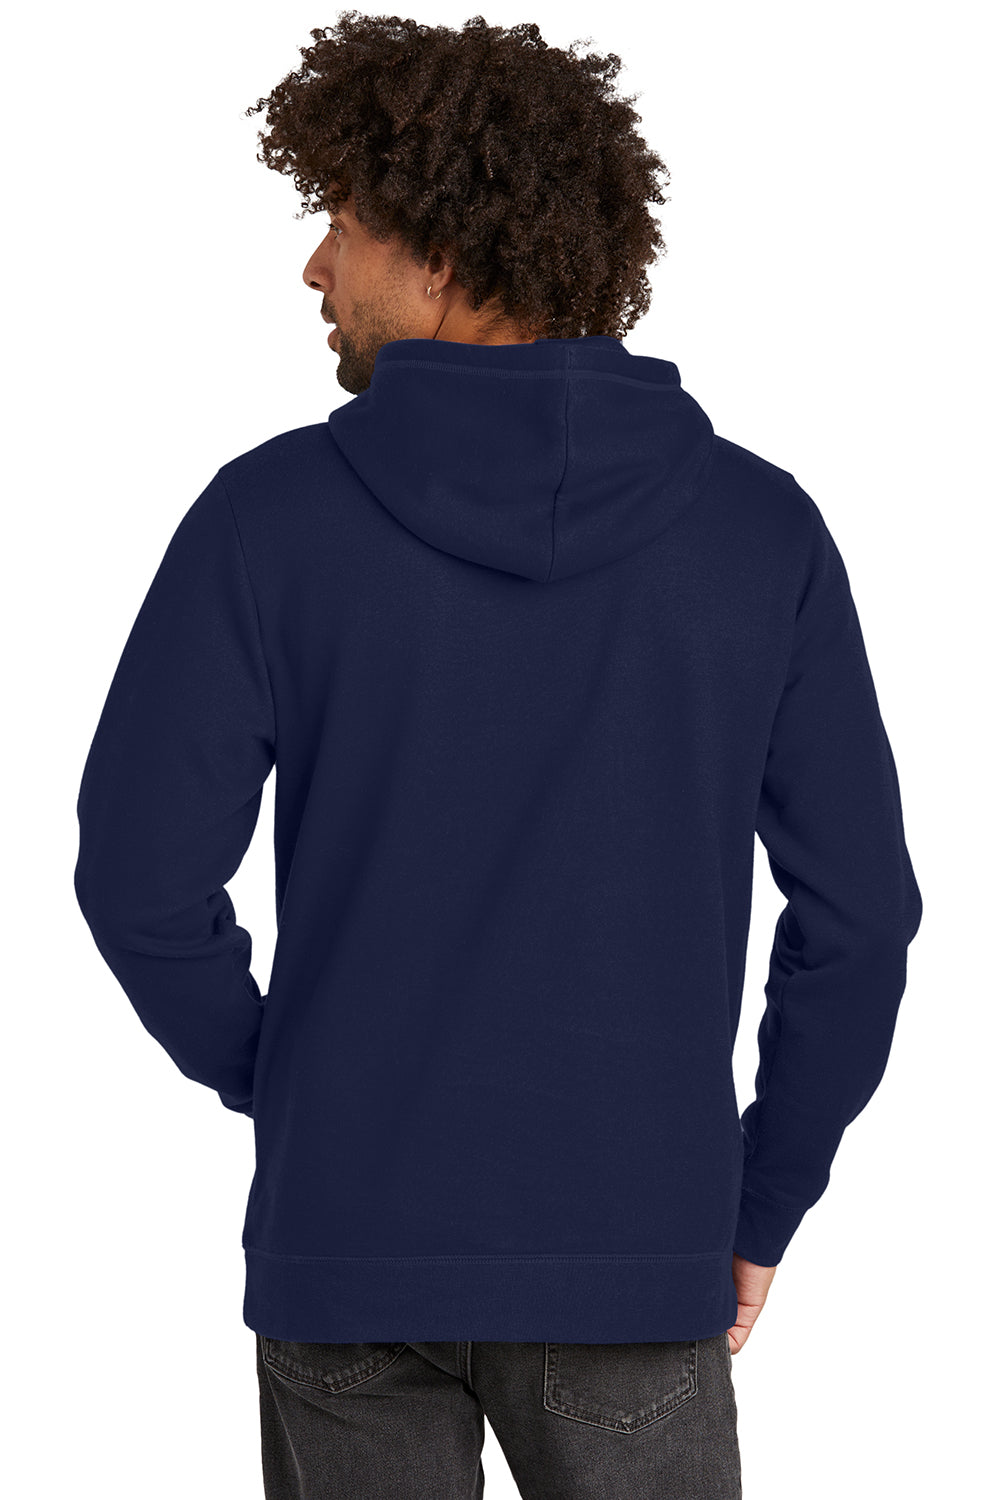 New Era NEA550 Mens Comeback Fleece Hooded Sweatshirt Hoodie True Navy Blue Back